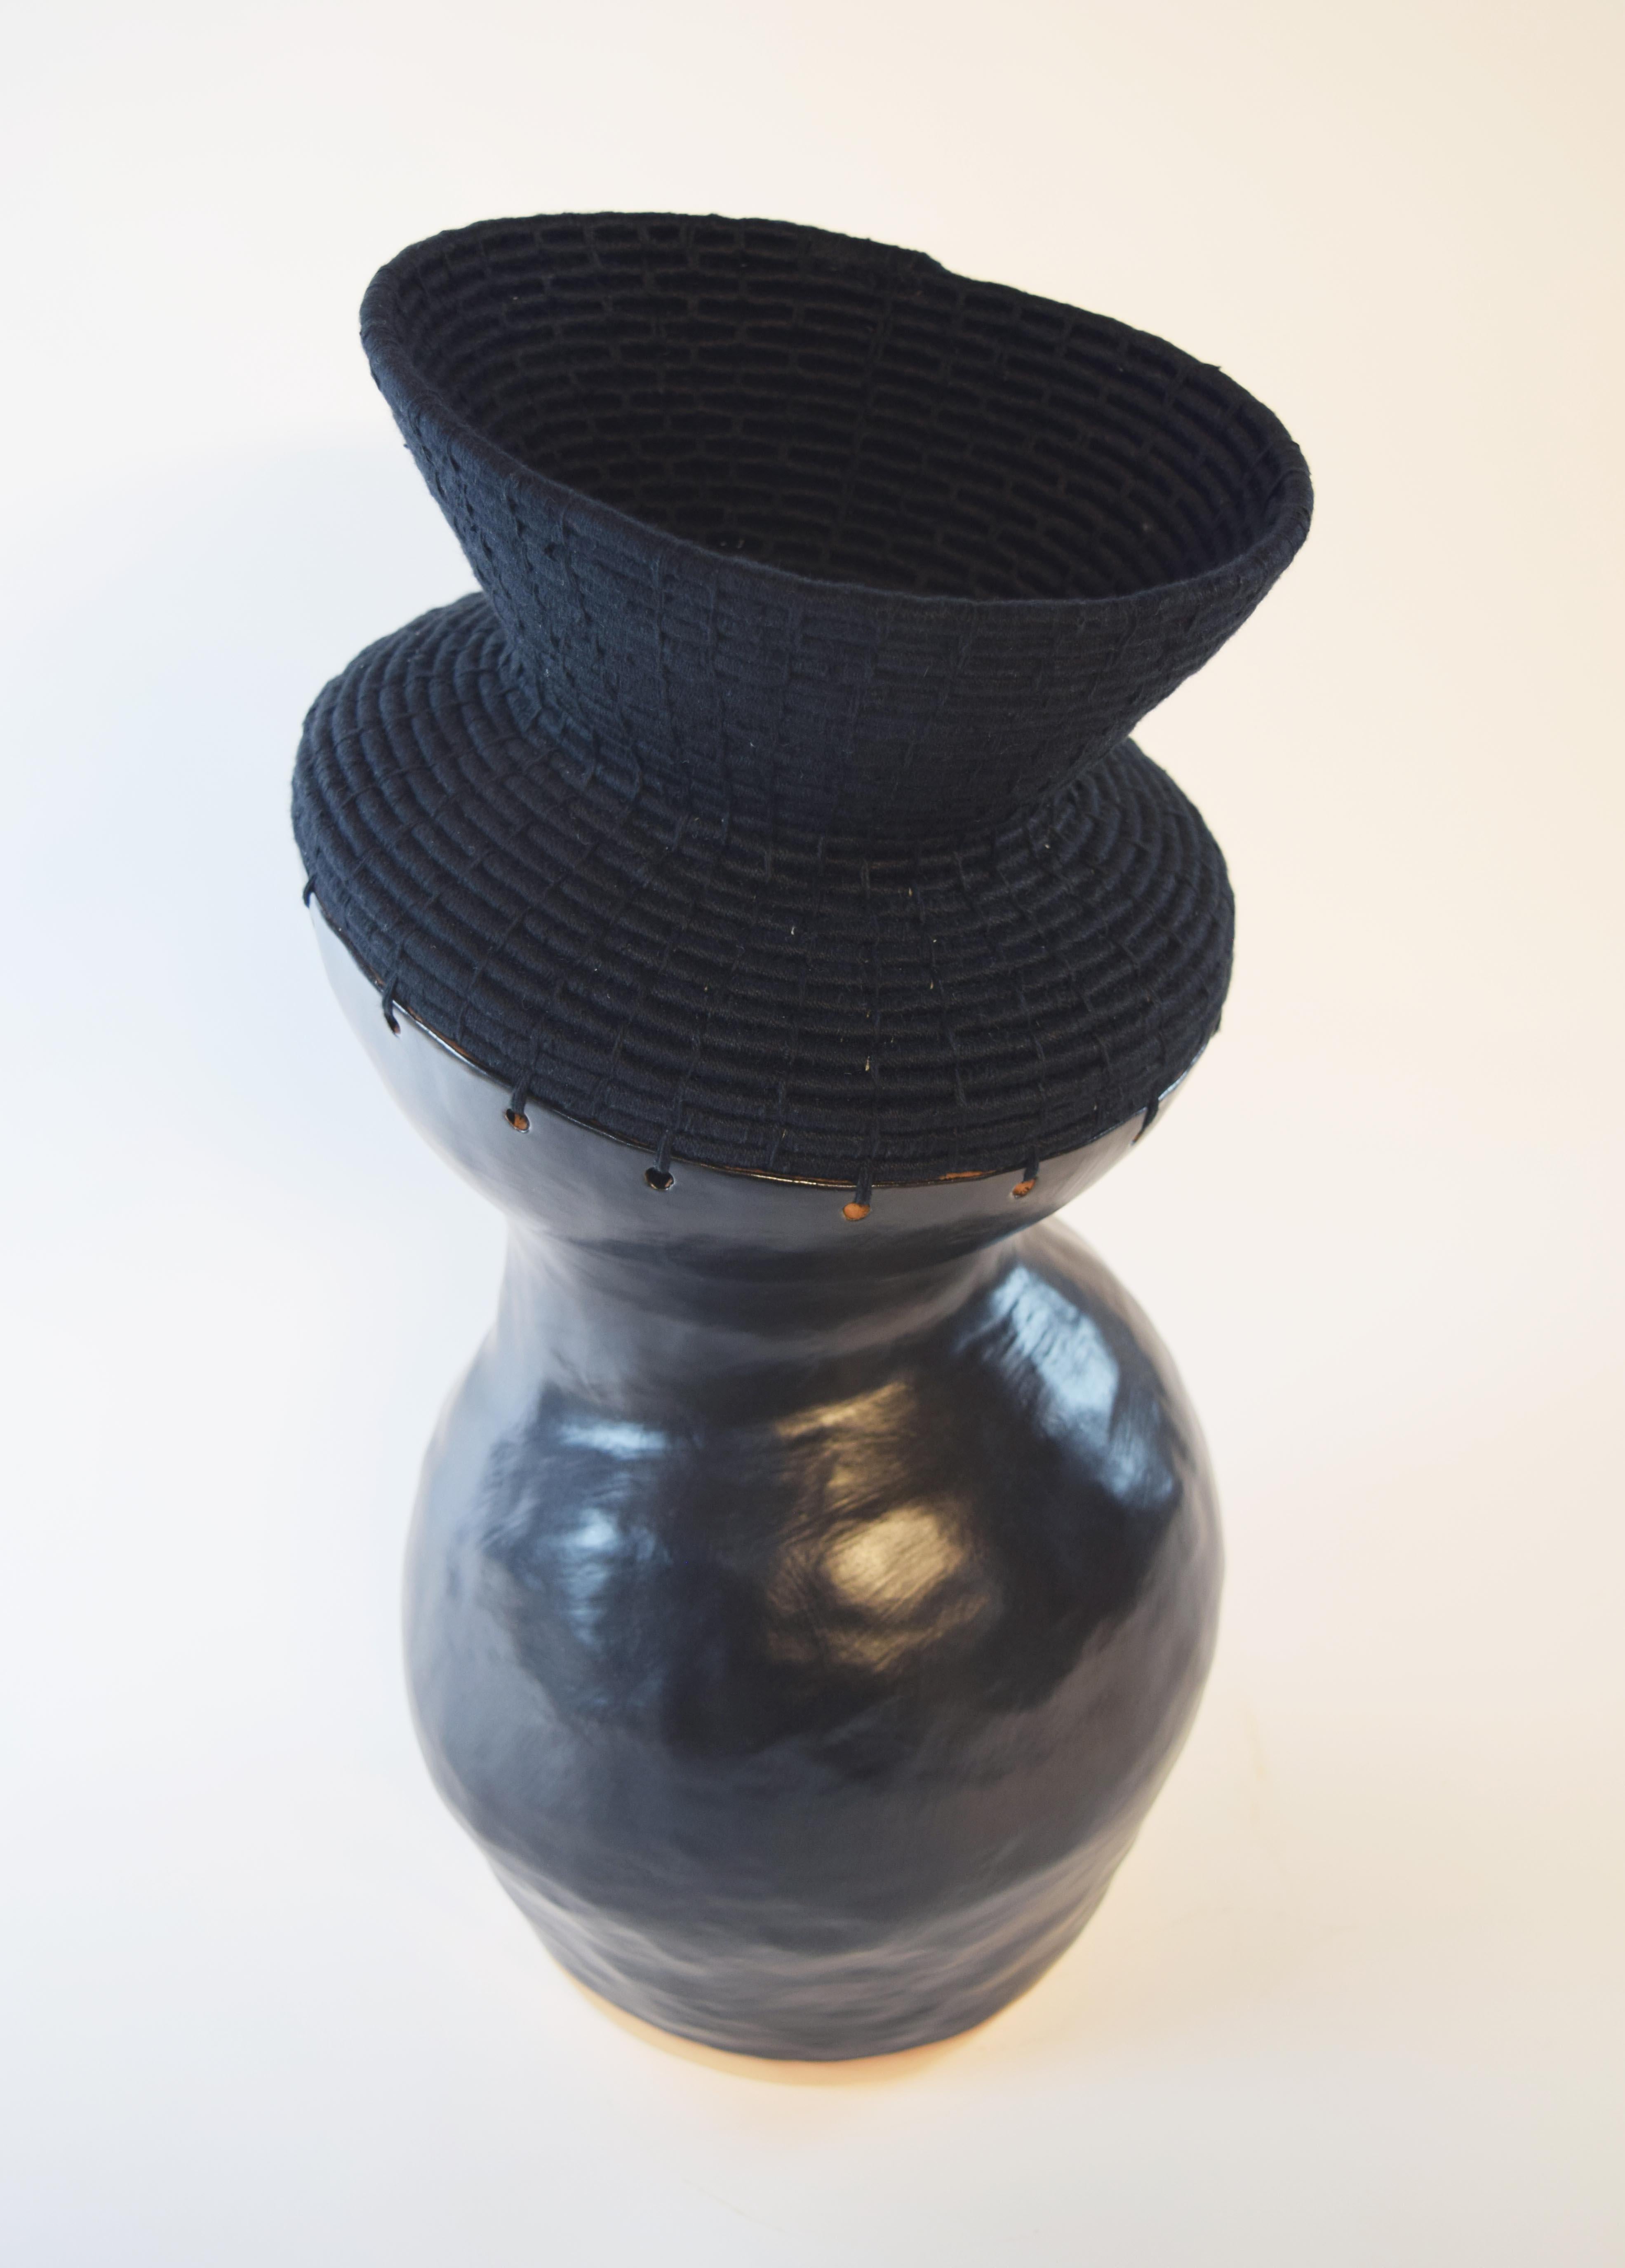 Hand-Crafted One of a Kind Ceramic & Woven Fiber Vessel #761, Satin Black Glaze, Black Cotton